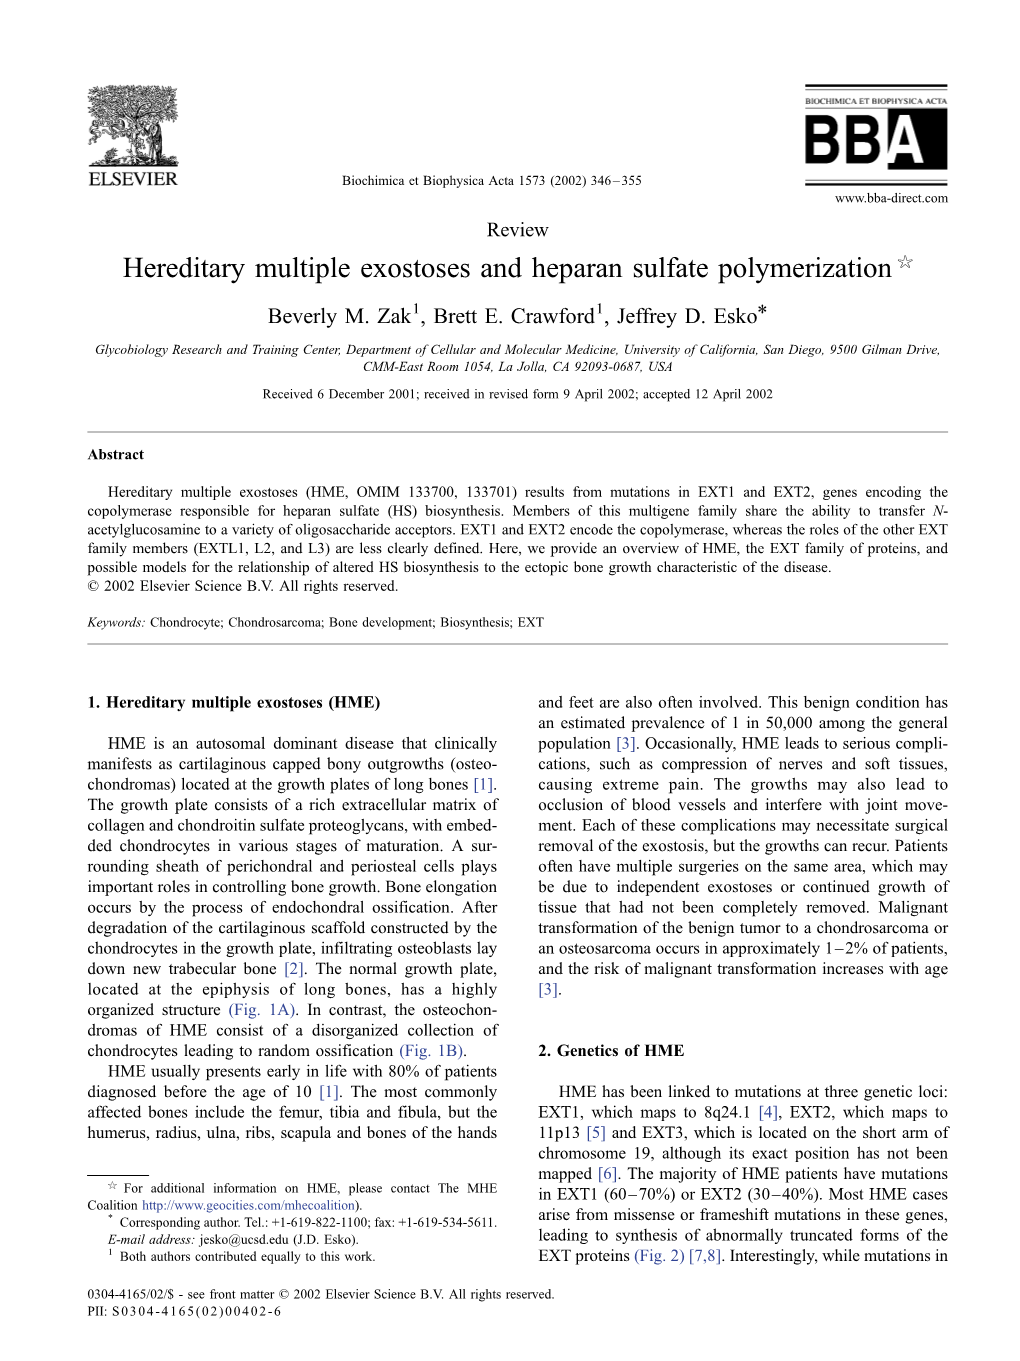 Hereditary Multiple Exostoses and Heparan Sulfate Polymerization $